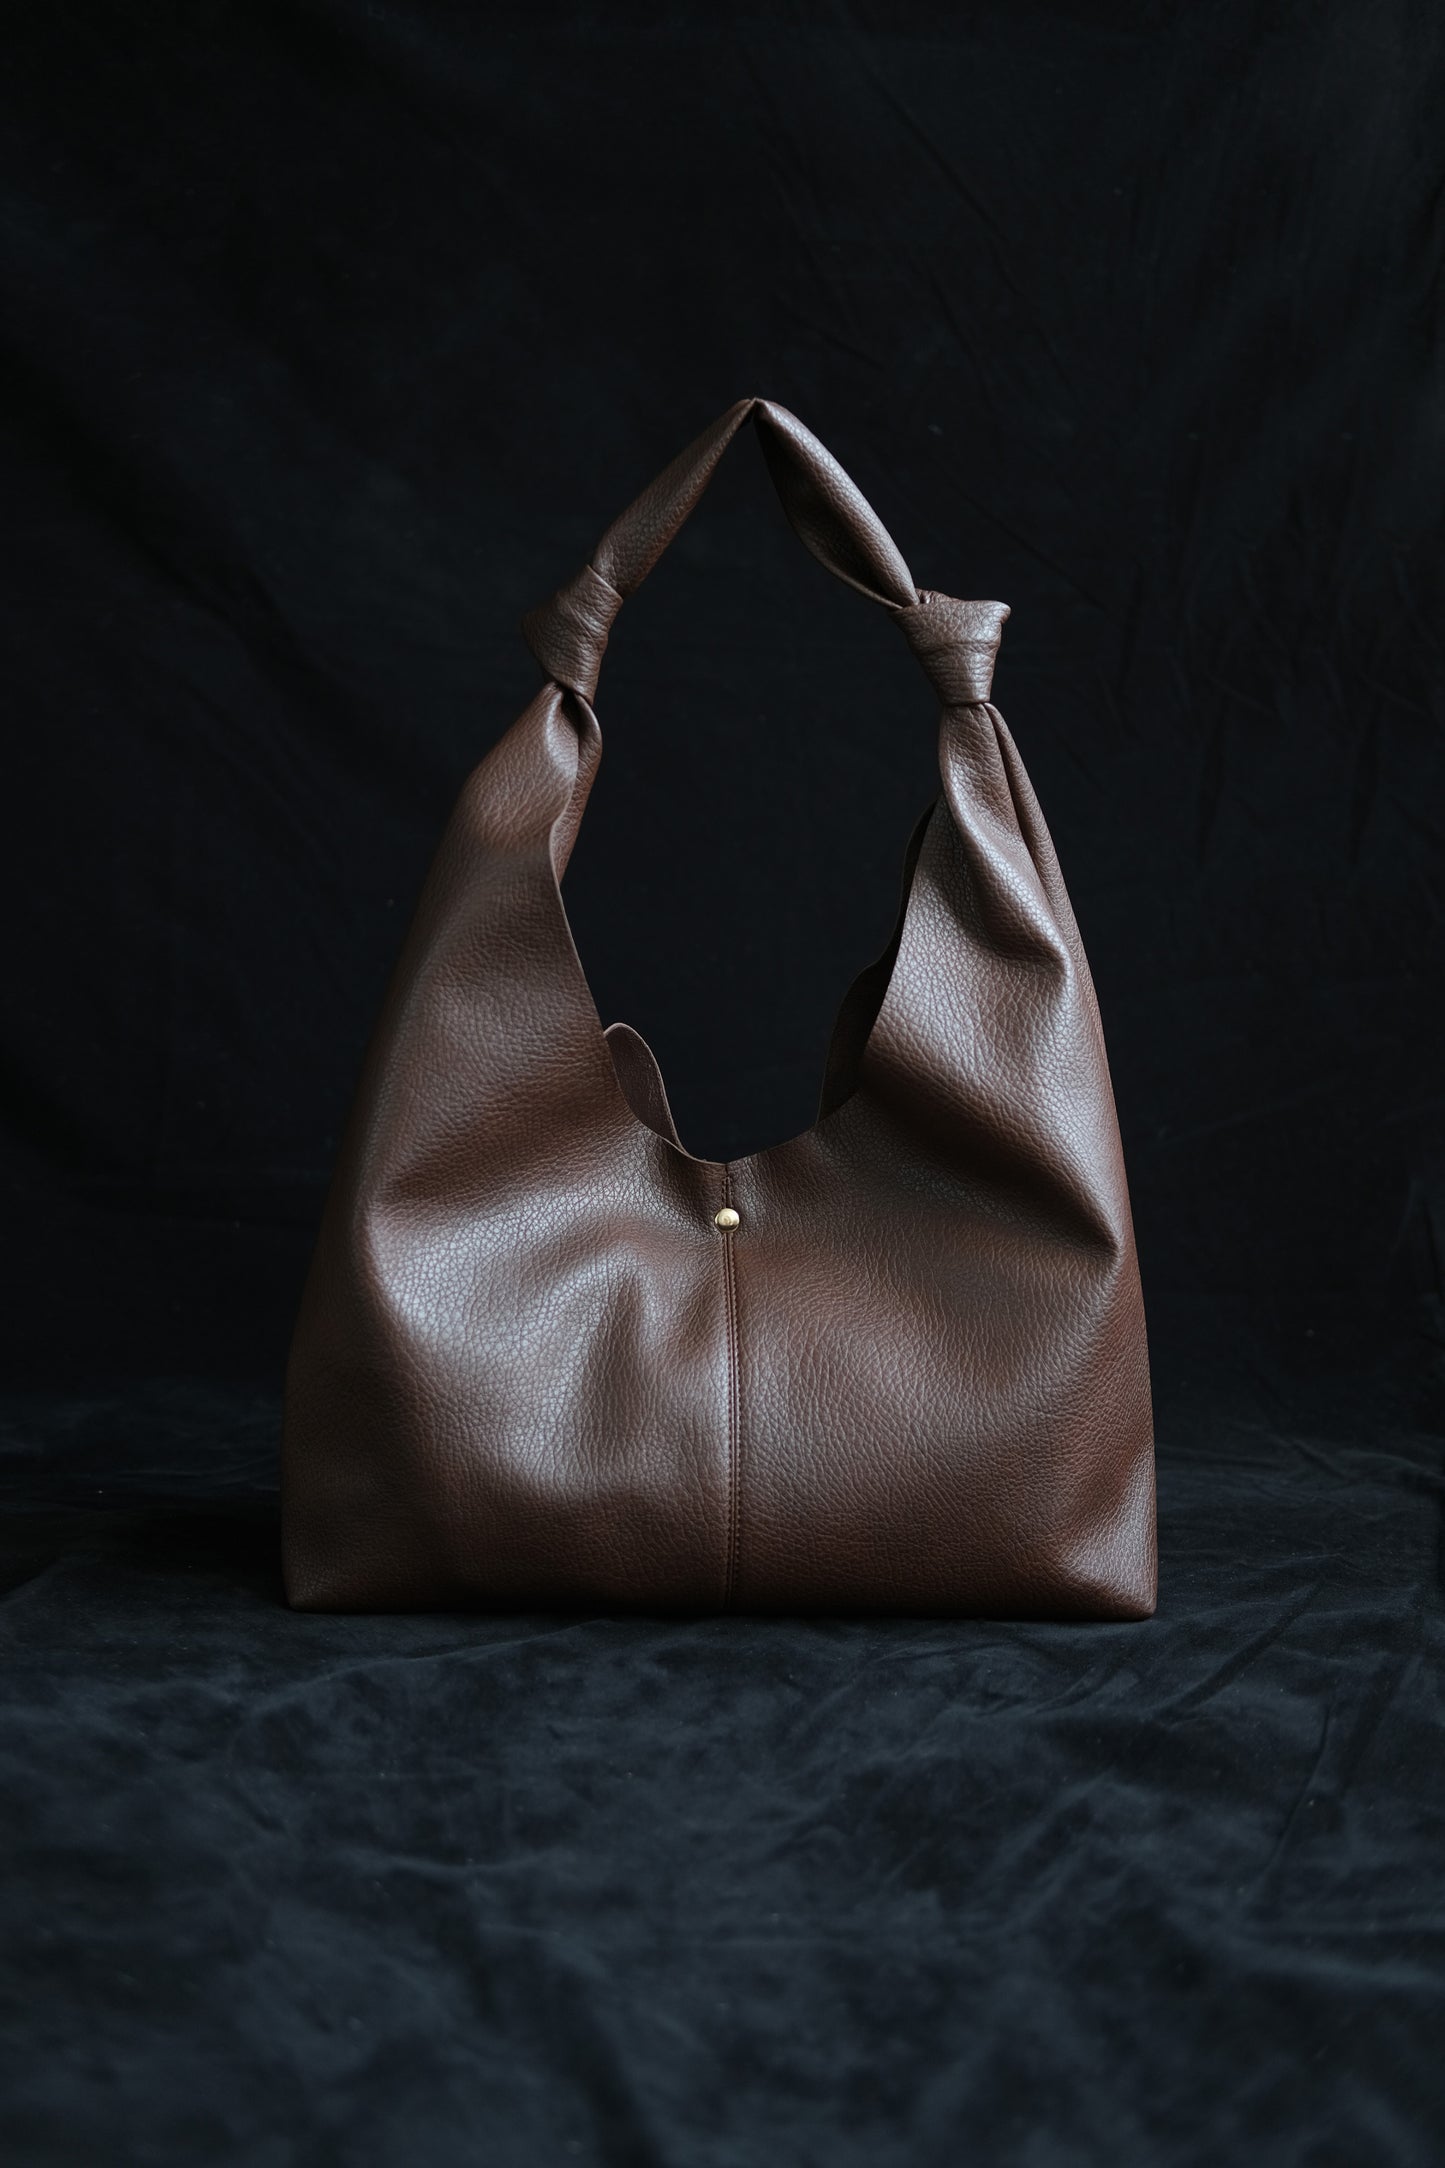 Vintage hand-held shoulder bag in coffee color